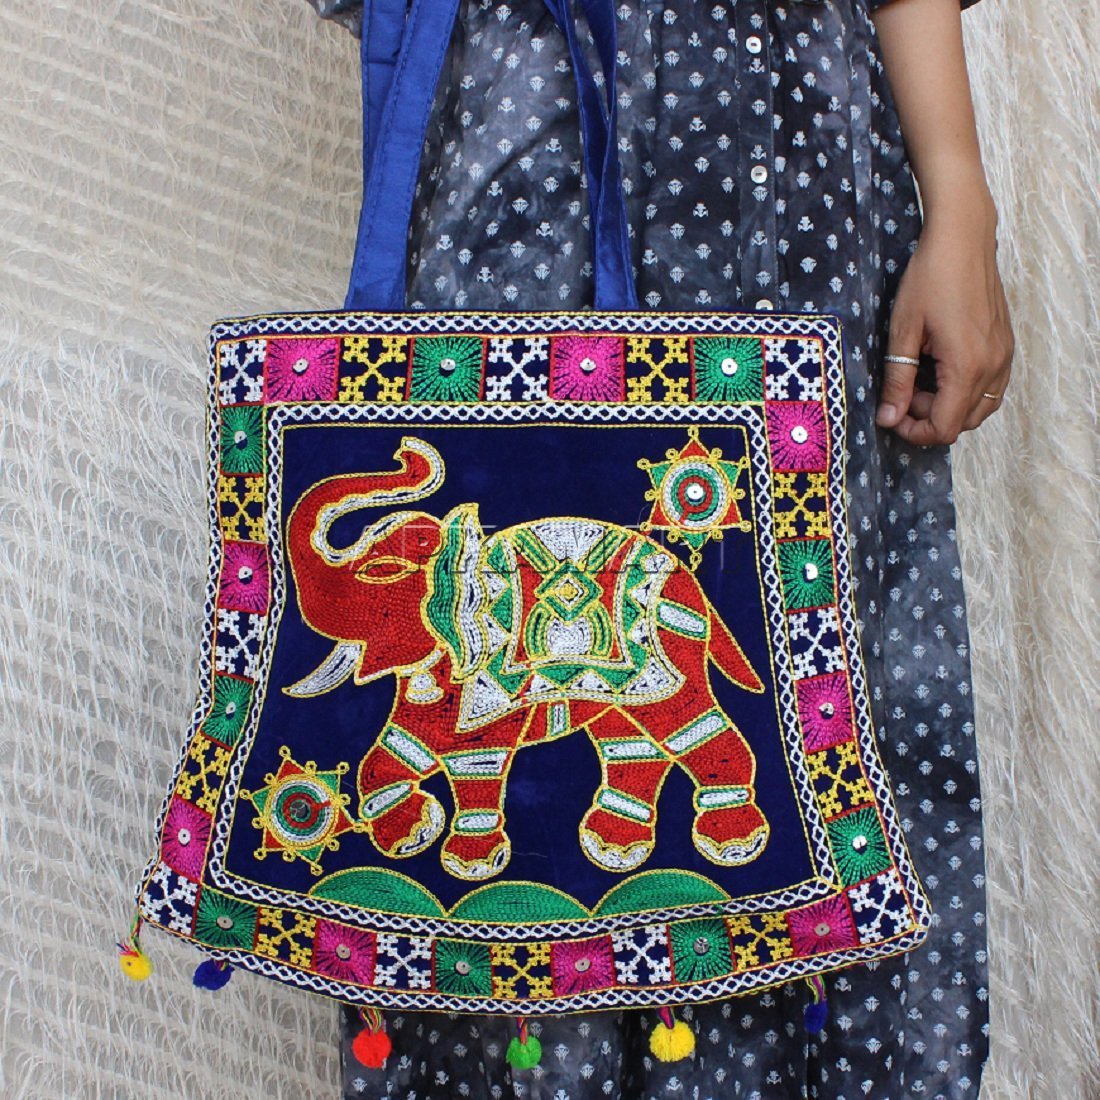 Handbags for Women | Side Bags for Women - ApkaMart